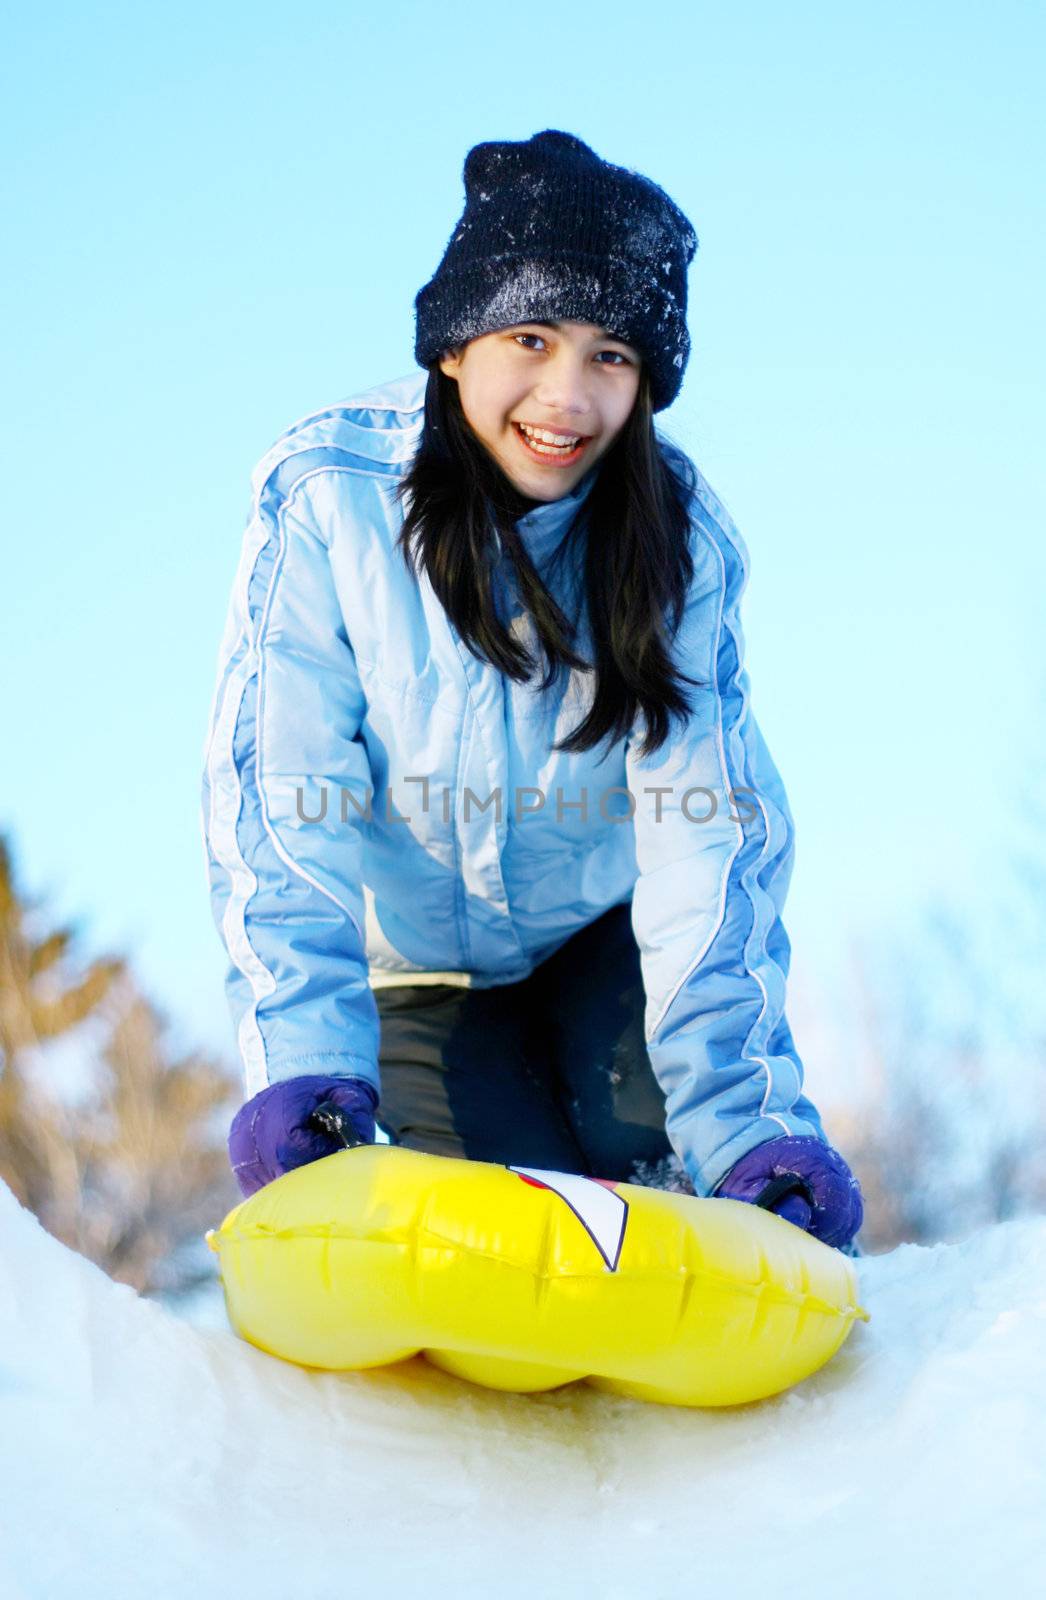 Biracial teen girl sledding down snow hill